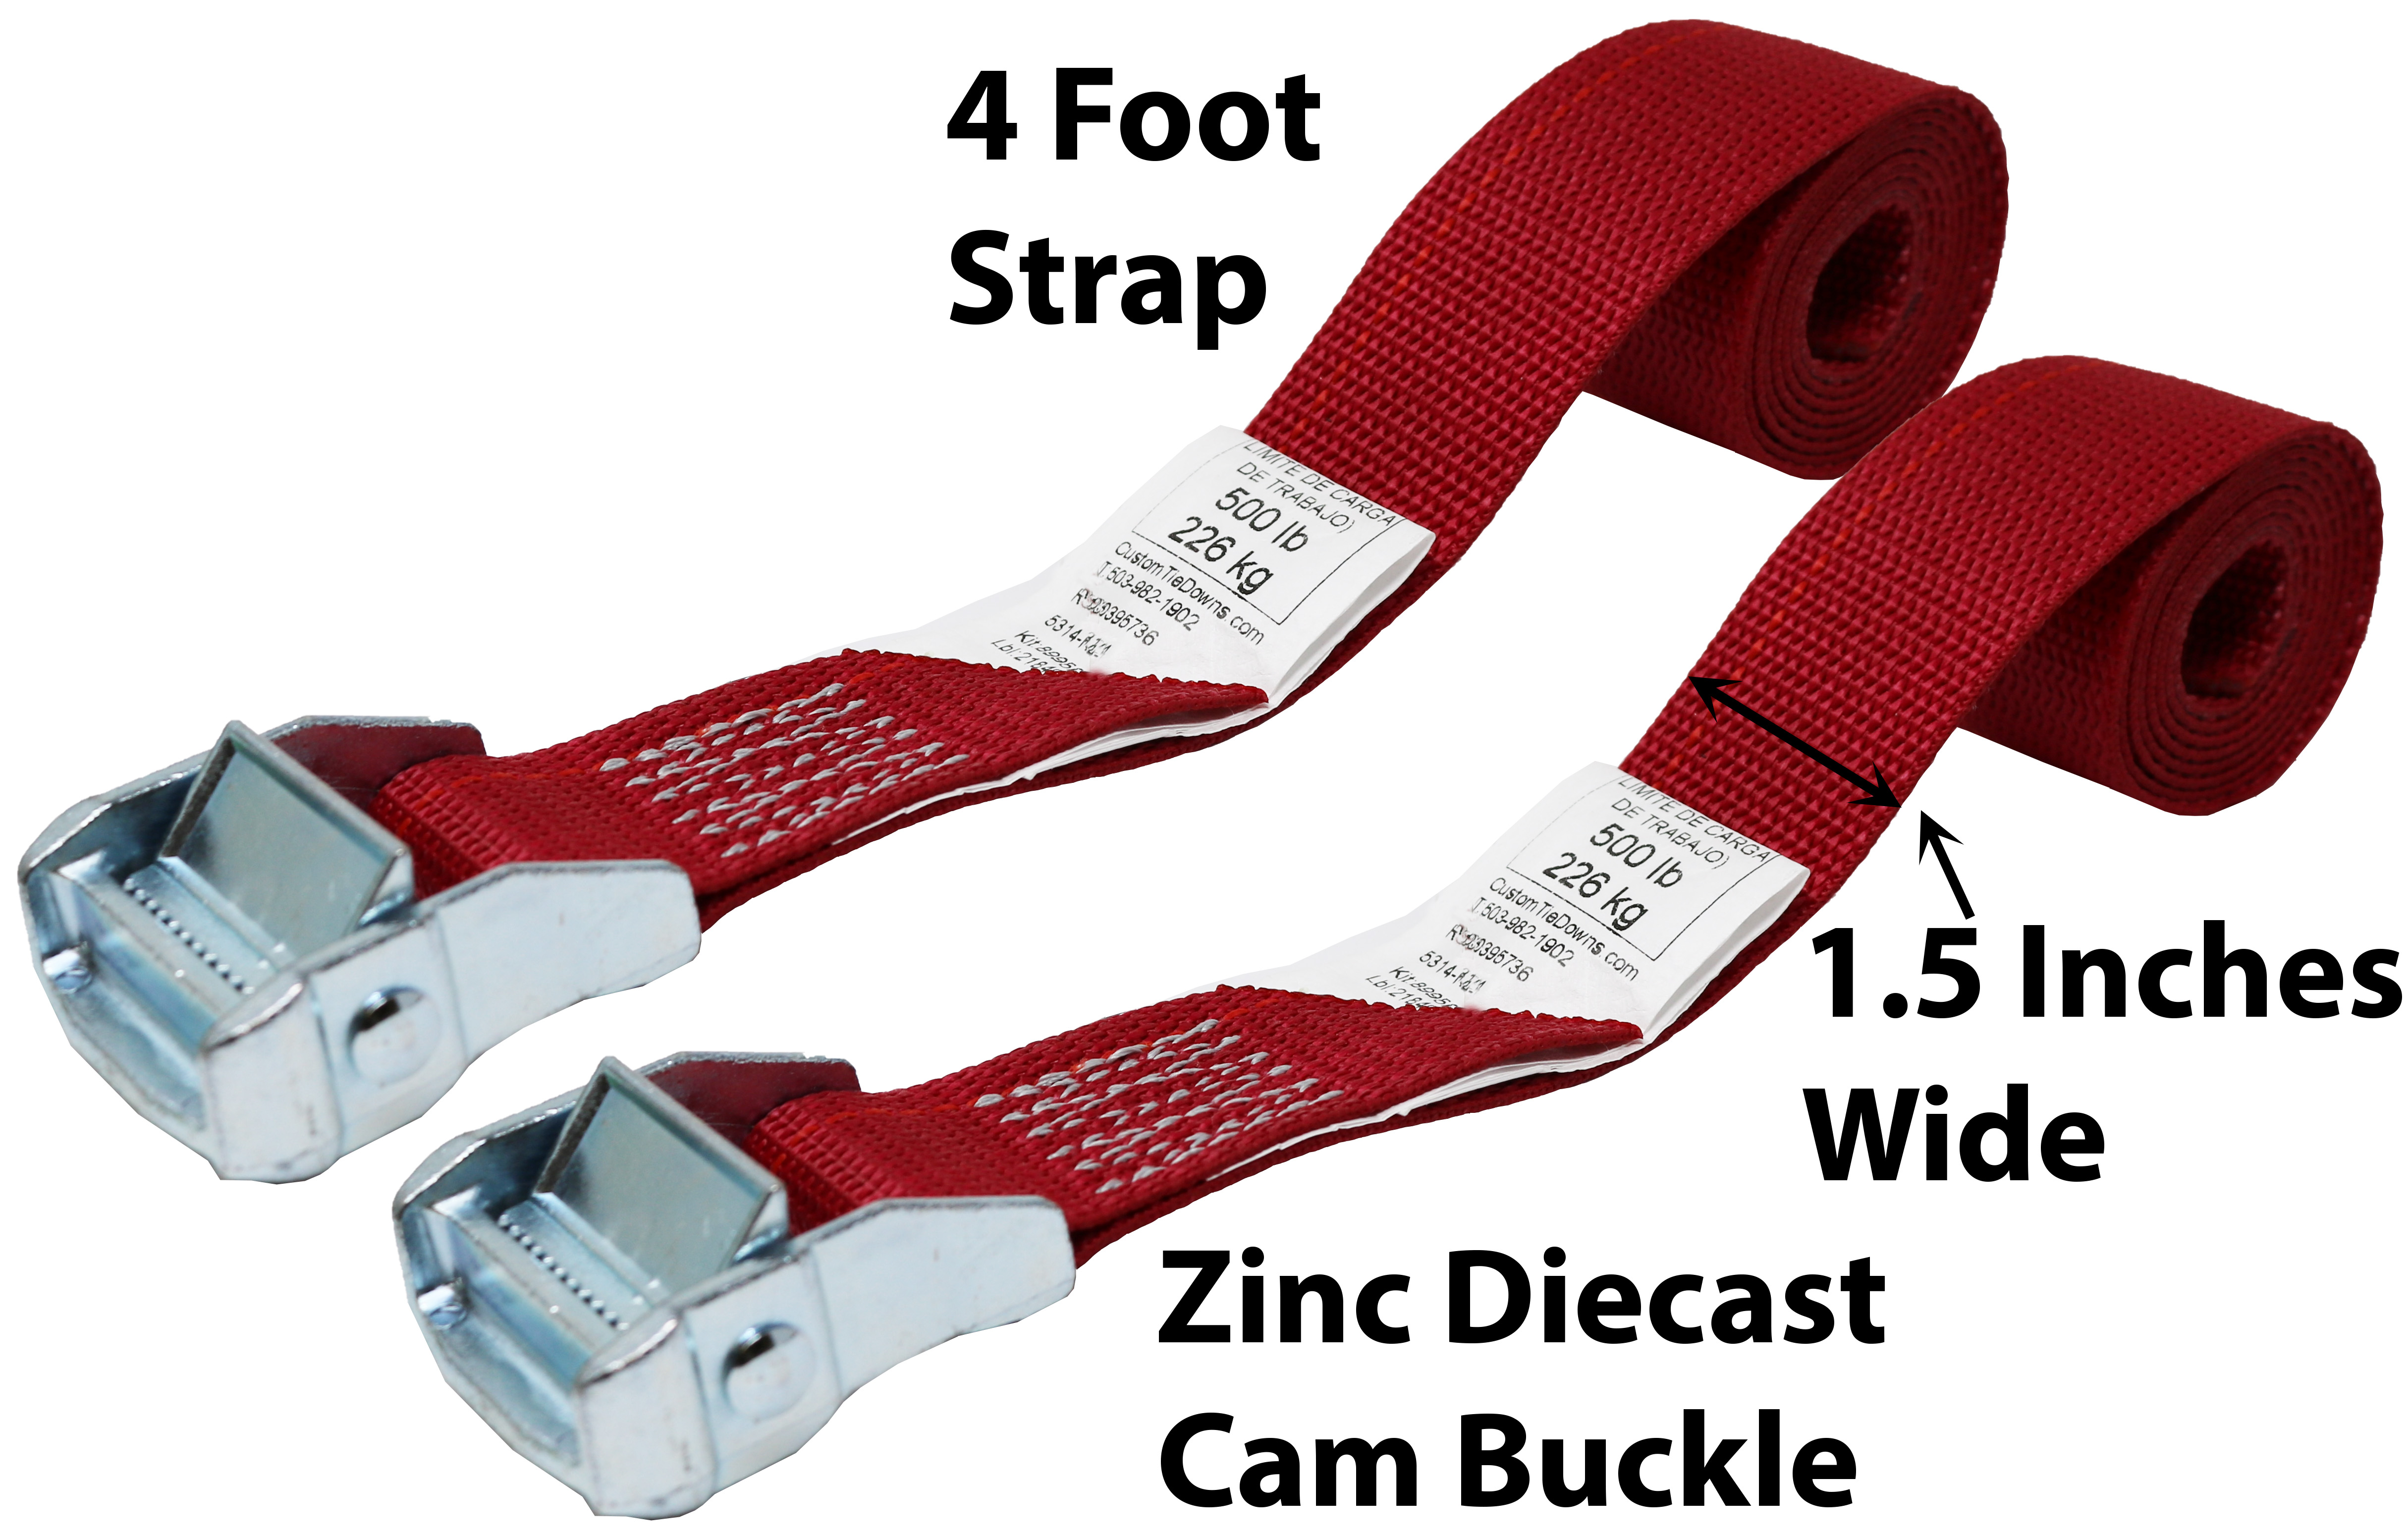 CustomTieDowns 2 Pack, 1.5 Inch x 4 Foot Cinch Strap Endless Loop Tie Down(no hooks). Zinc Diecast Cam Buckle,(Dark Red) 8246 - image 2 of 4